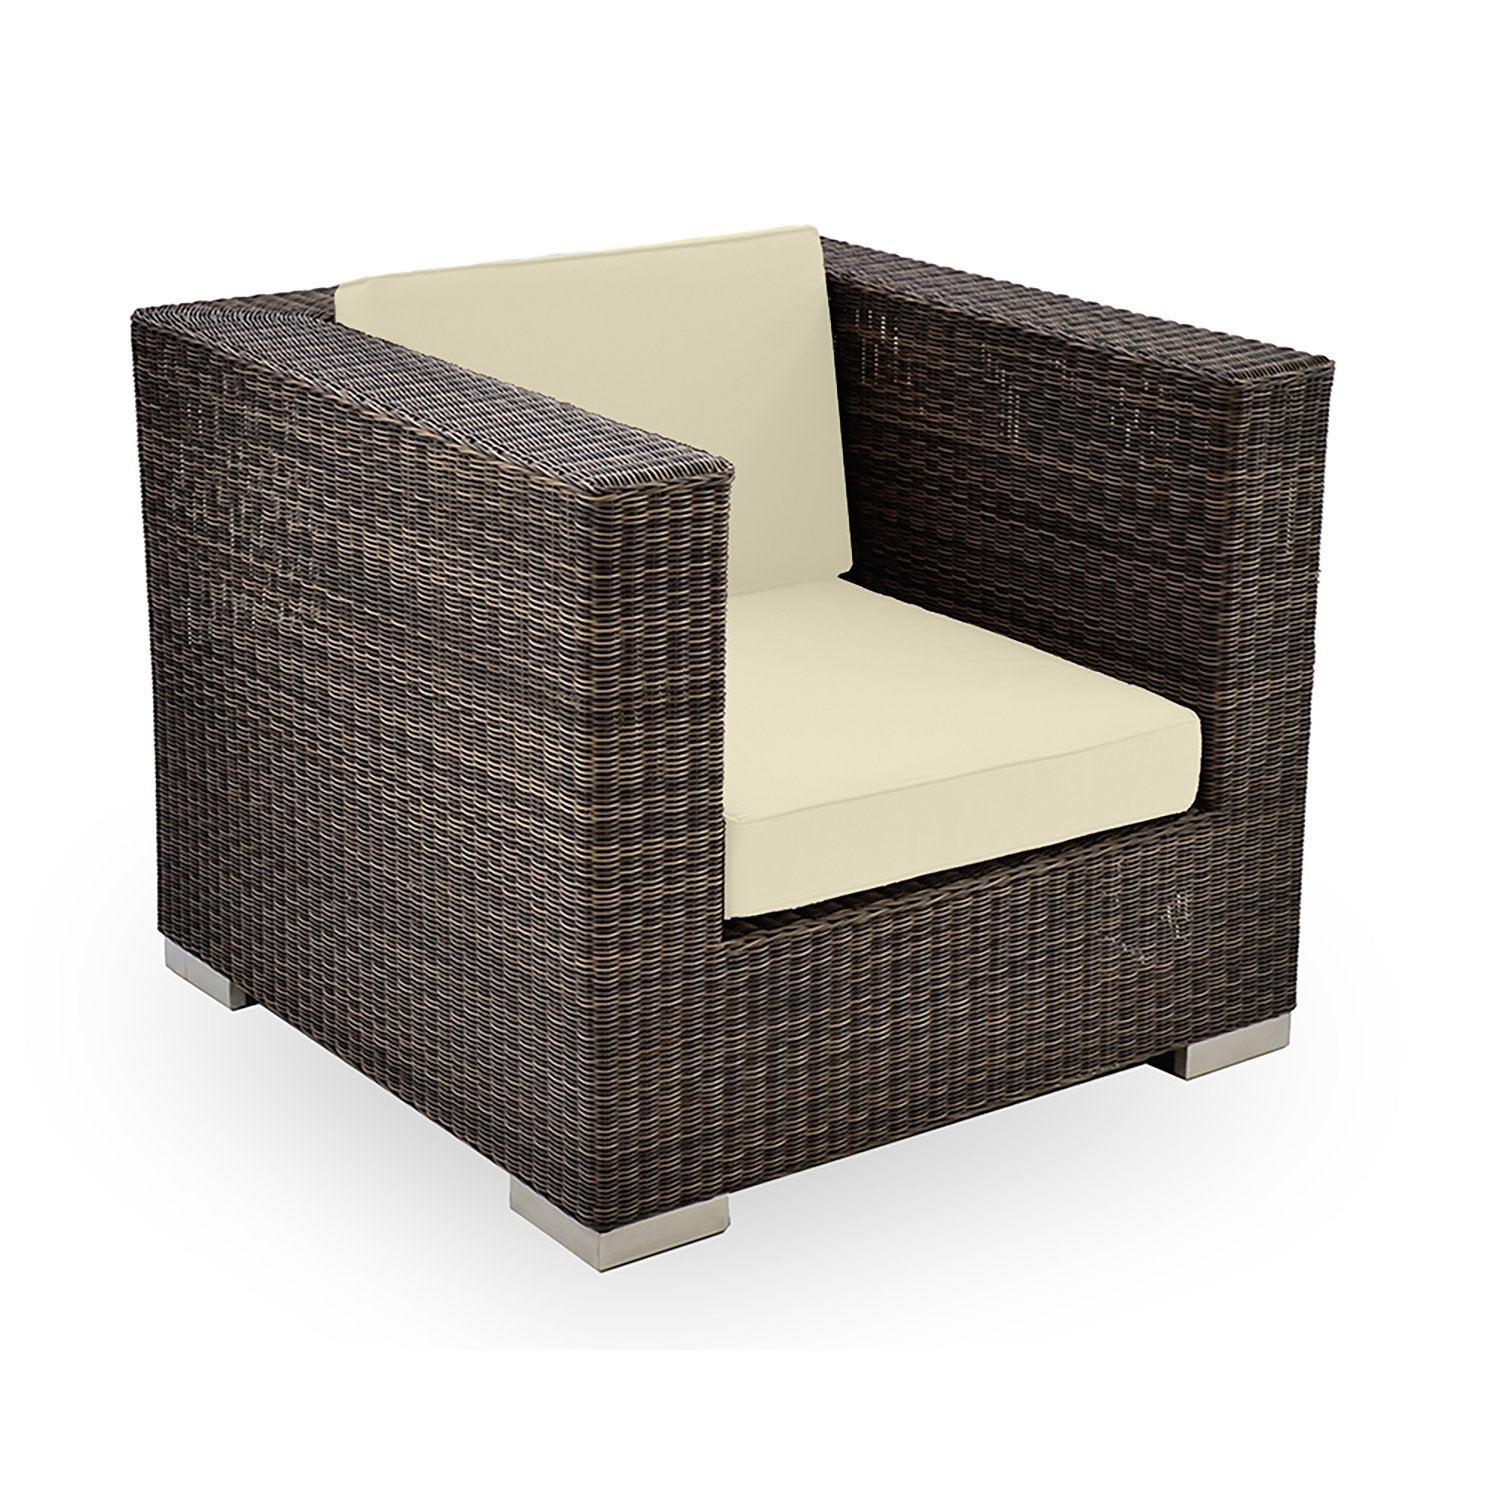 Cuba lounge chair in dark weave with cream cushions